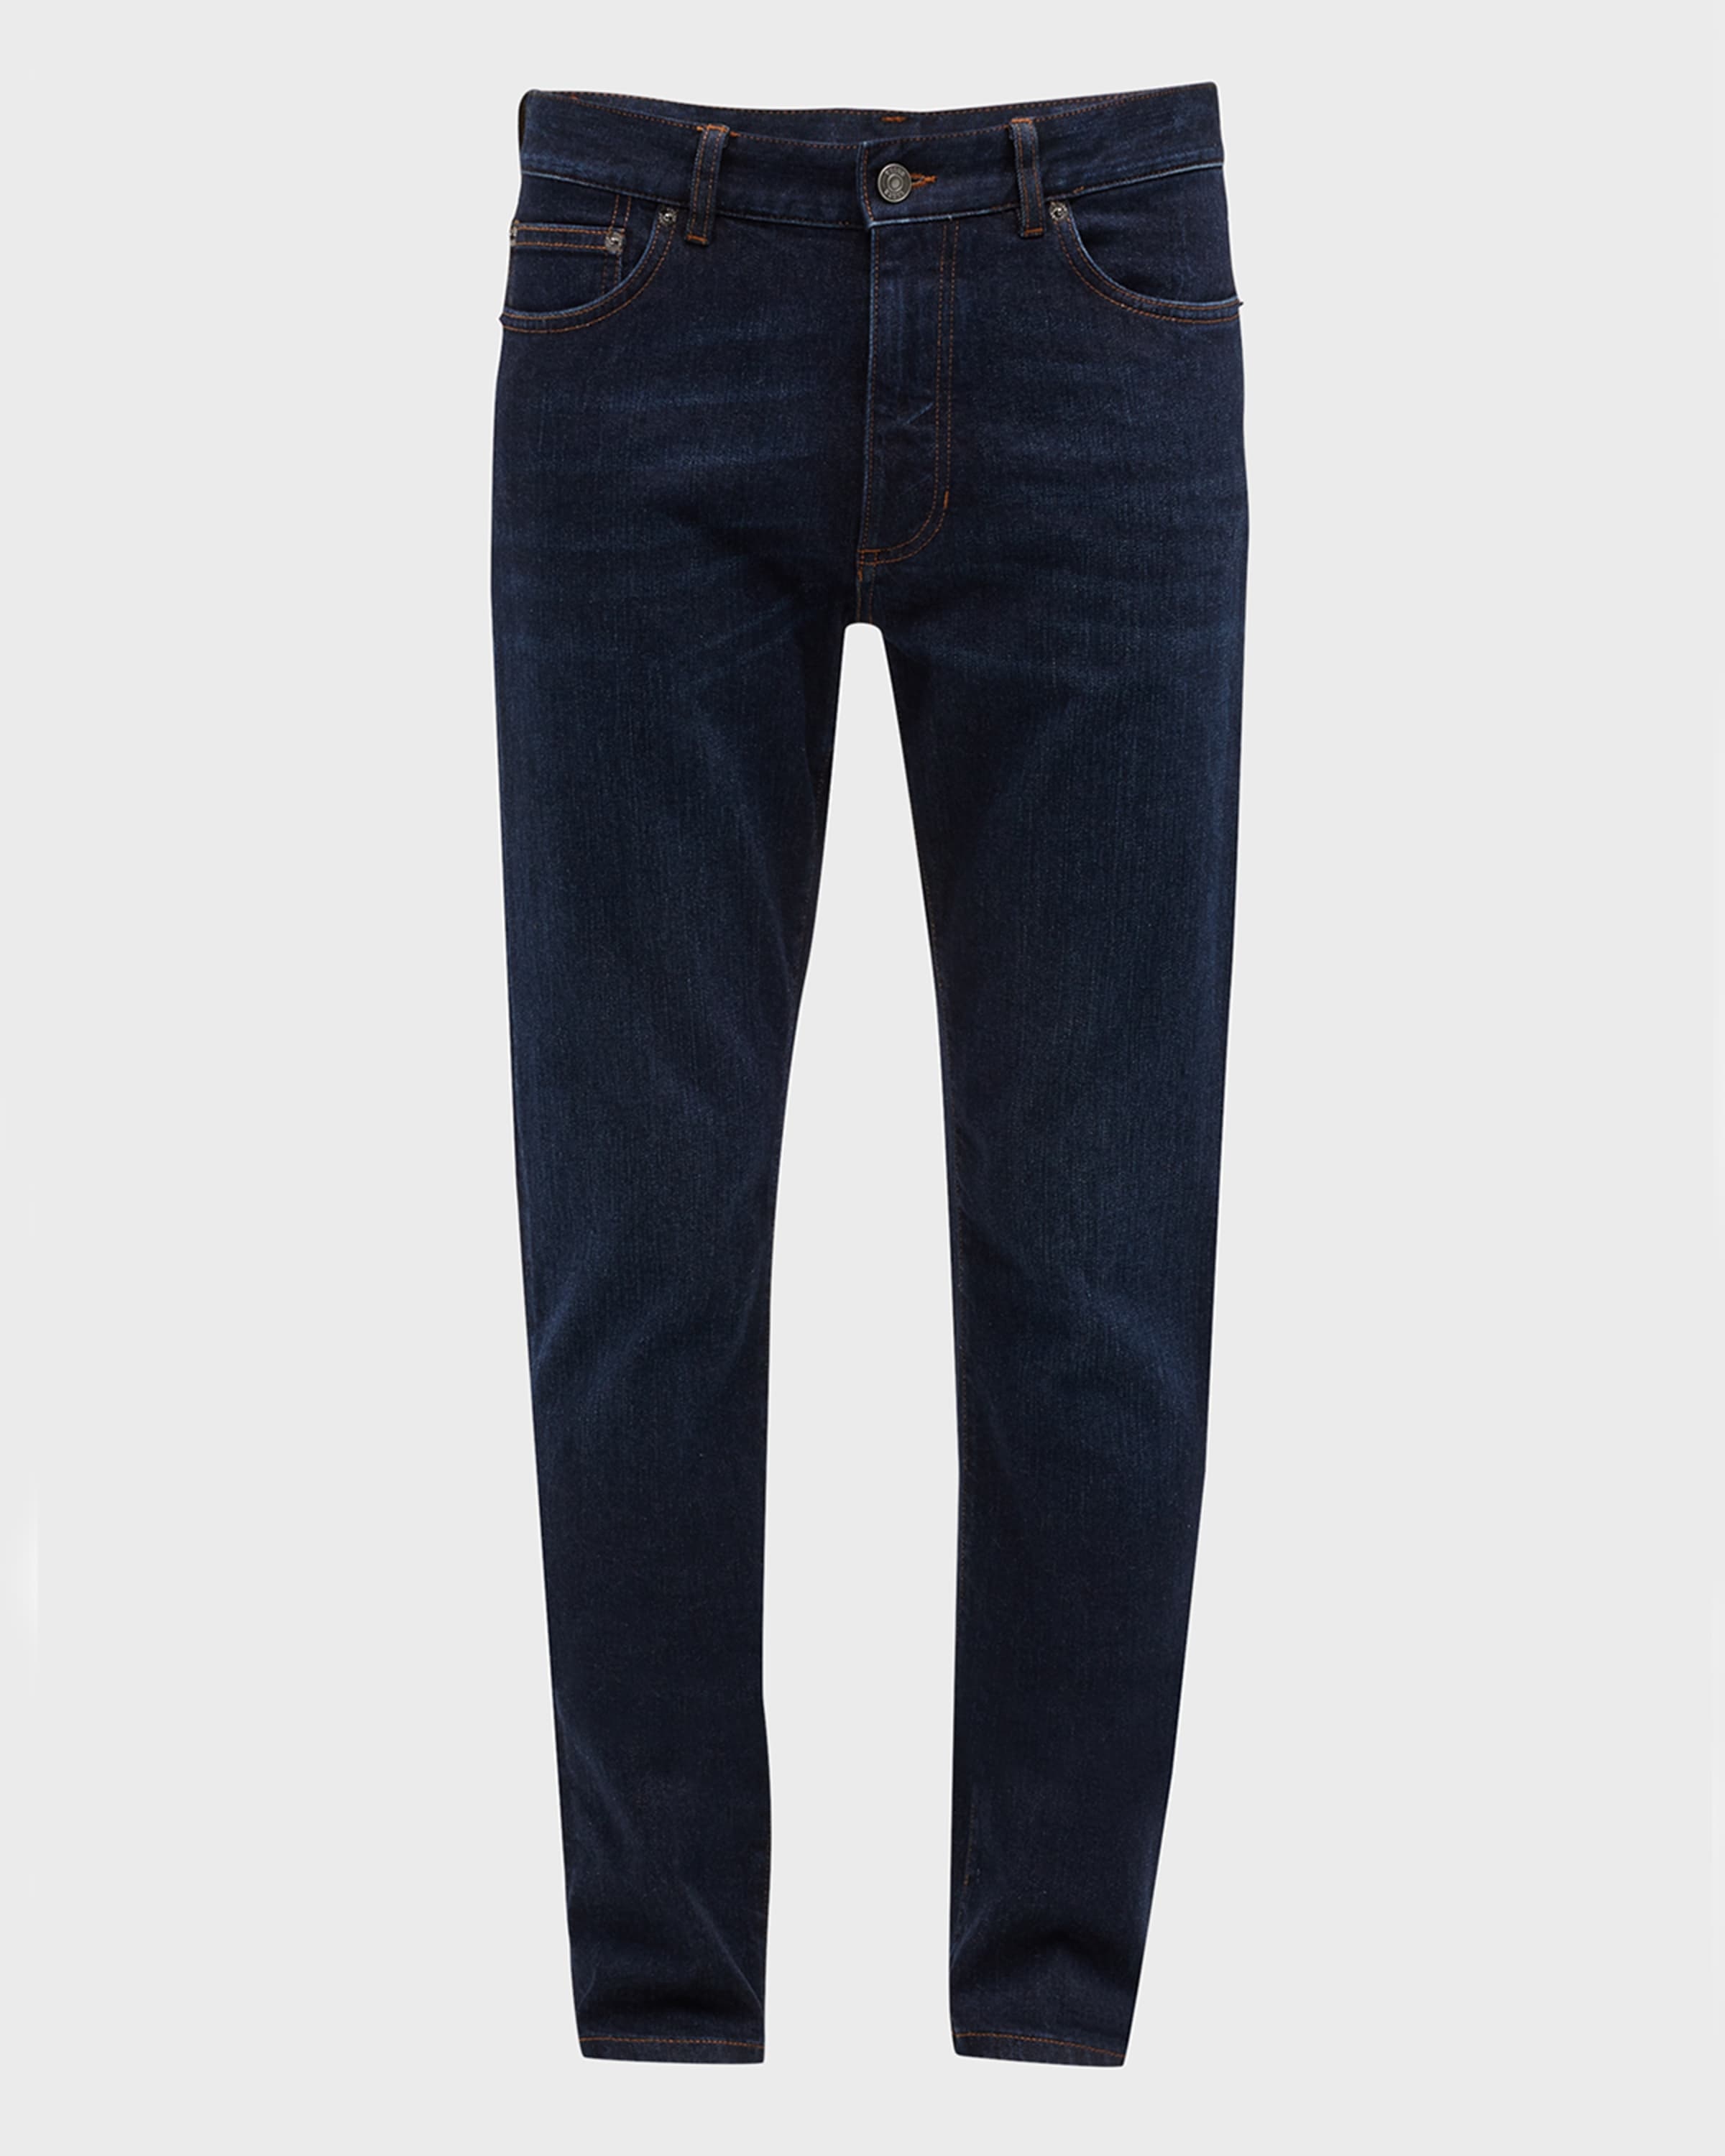 Men's 5-Pocket Dark Wash Denim Jeans - 1